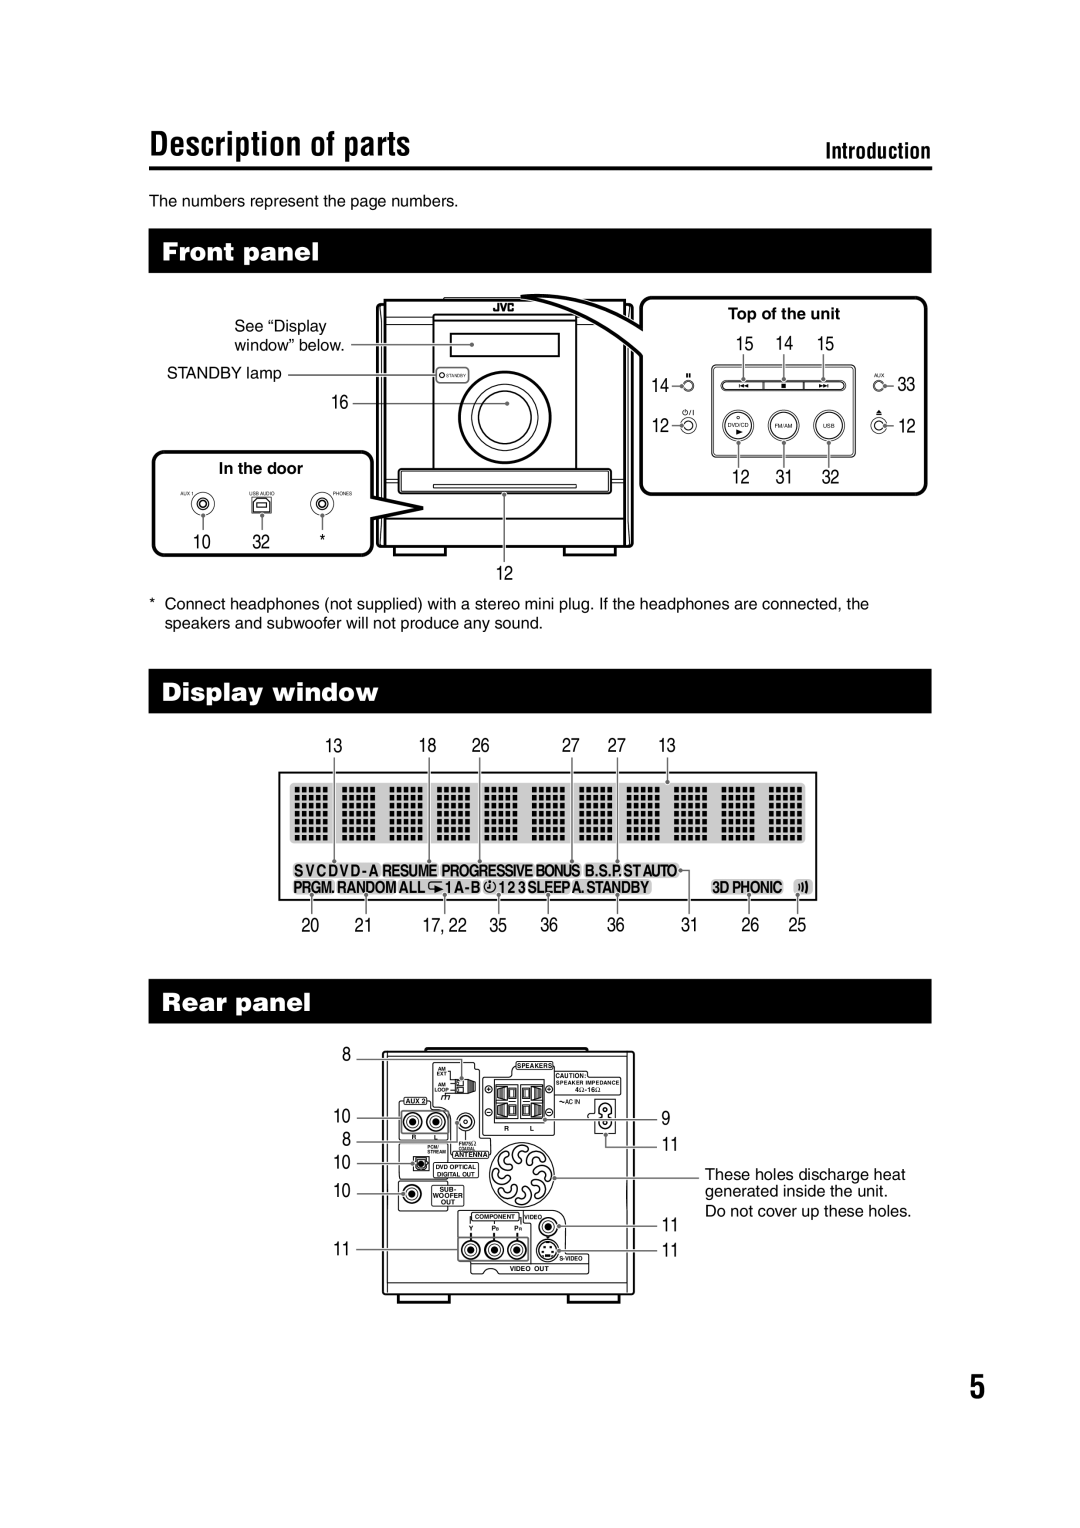 JVC EX-D11 manual Description of parts, Front panel, Display window, Rear panel, Introduction 